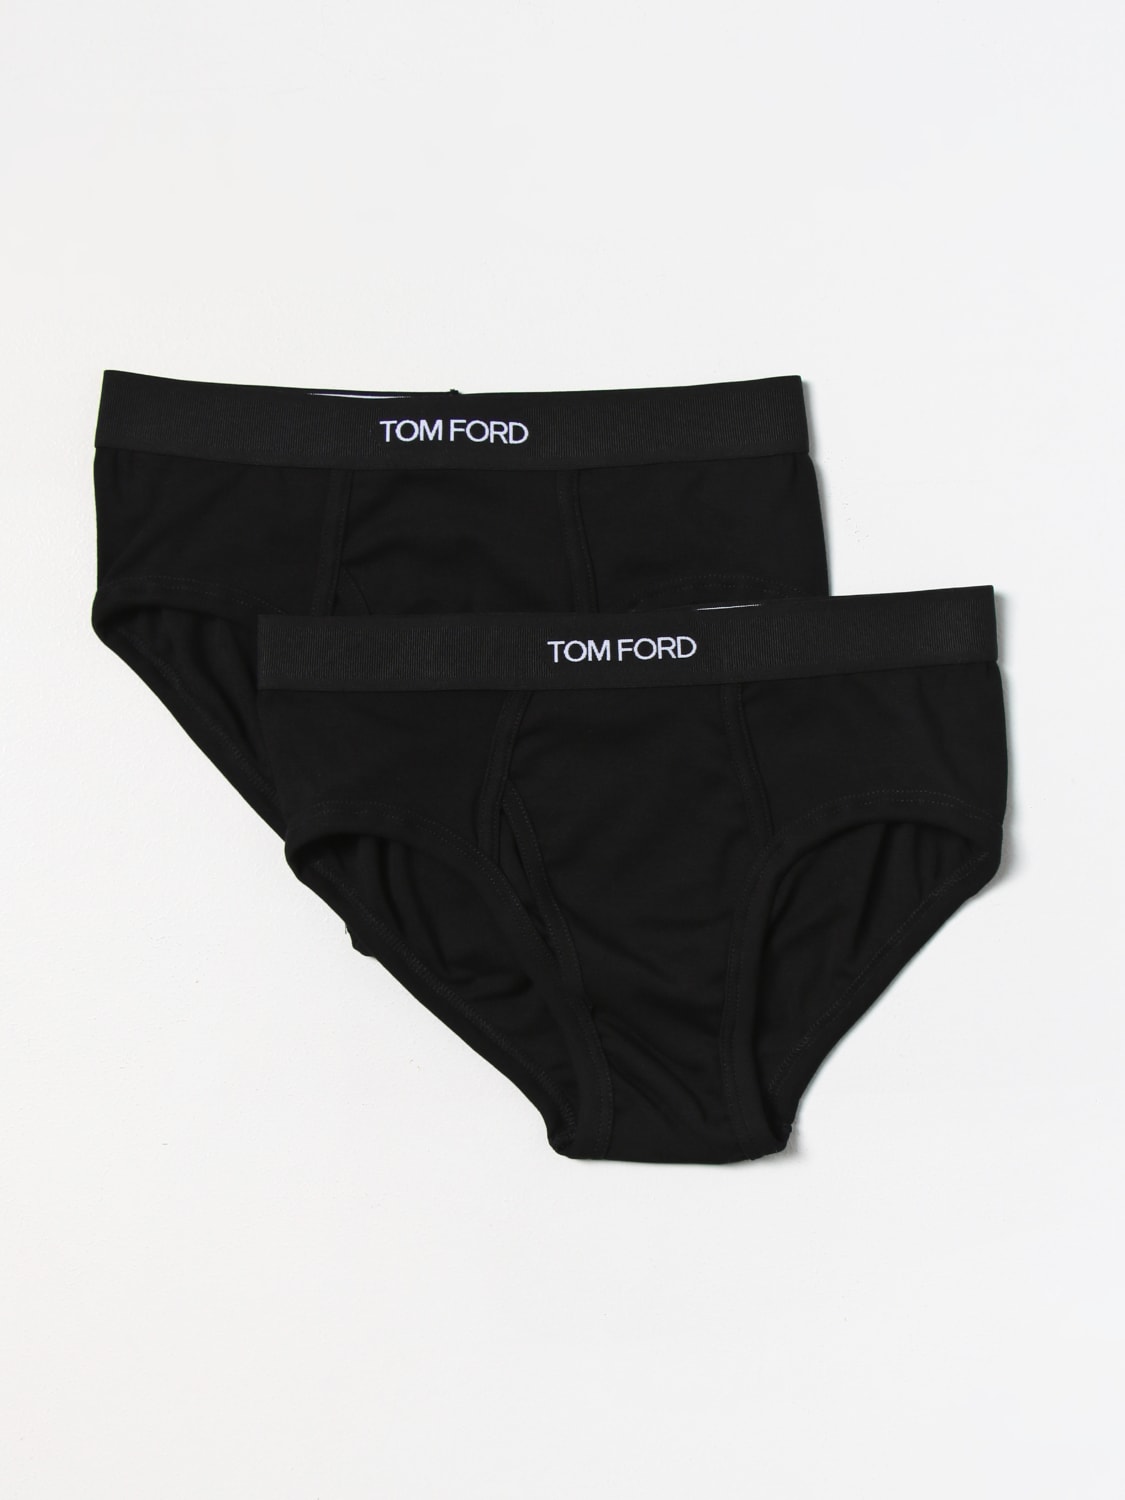 Porto evig forvirring TOM FORD: underwear for man - Black | Tom Ford underwear T4XC11040 online  on GIGLIO.COM